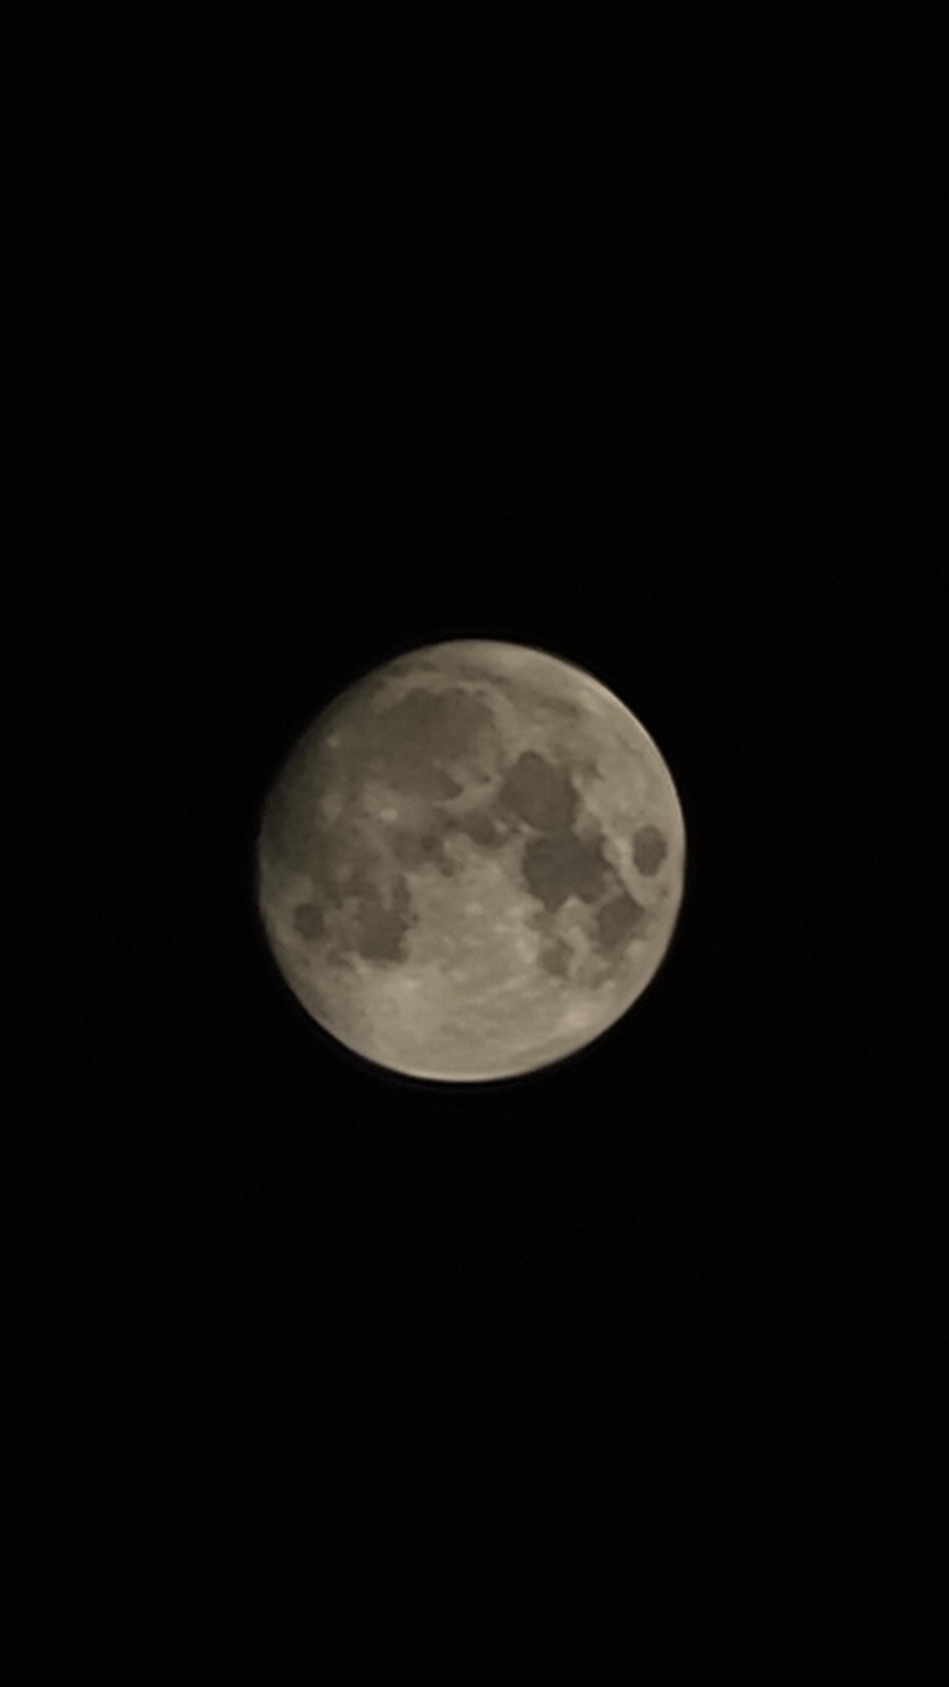 20210723_000100.jpg : 밤 하늘에 보름달이 떳네요